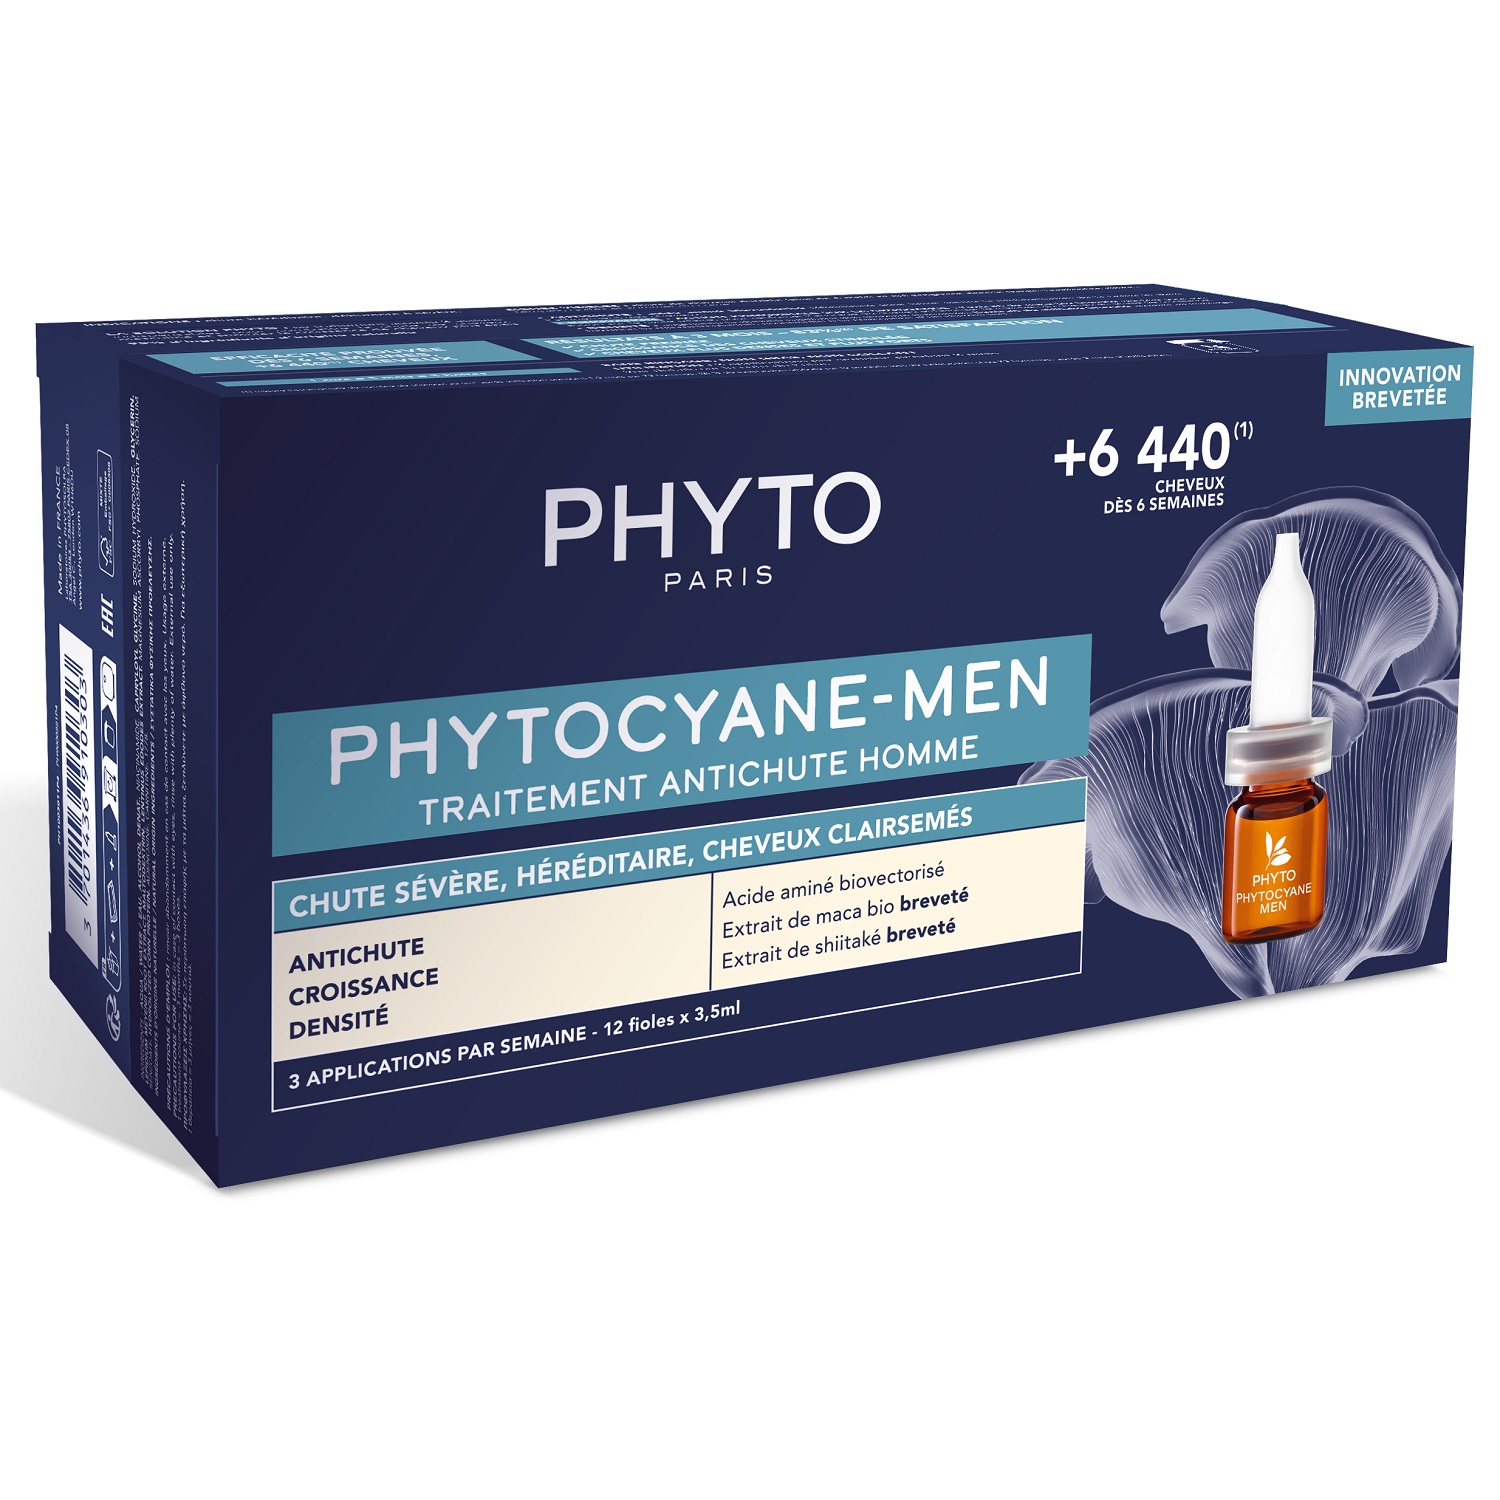 Phyto Сыворотка против выпадения волос для мужчин, 12 флаконов х 3,5 мл (Phyto, Phytocyane) phyto фитоциан мэн сыворотка против выпадения волос у мужчин 3 5мл х 12 флаконов